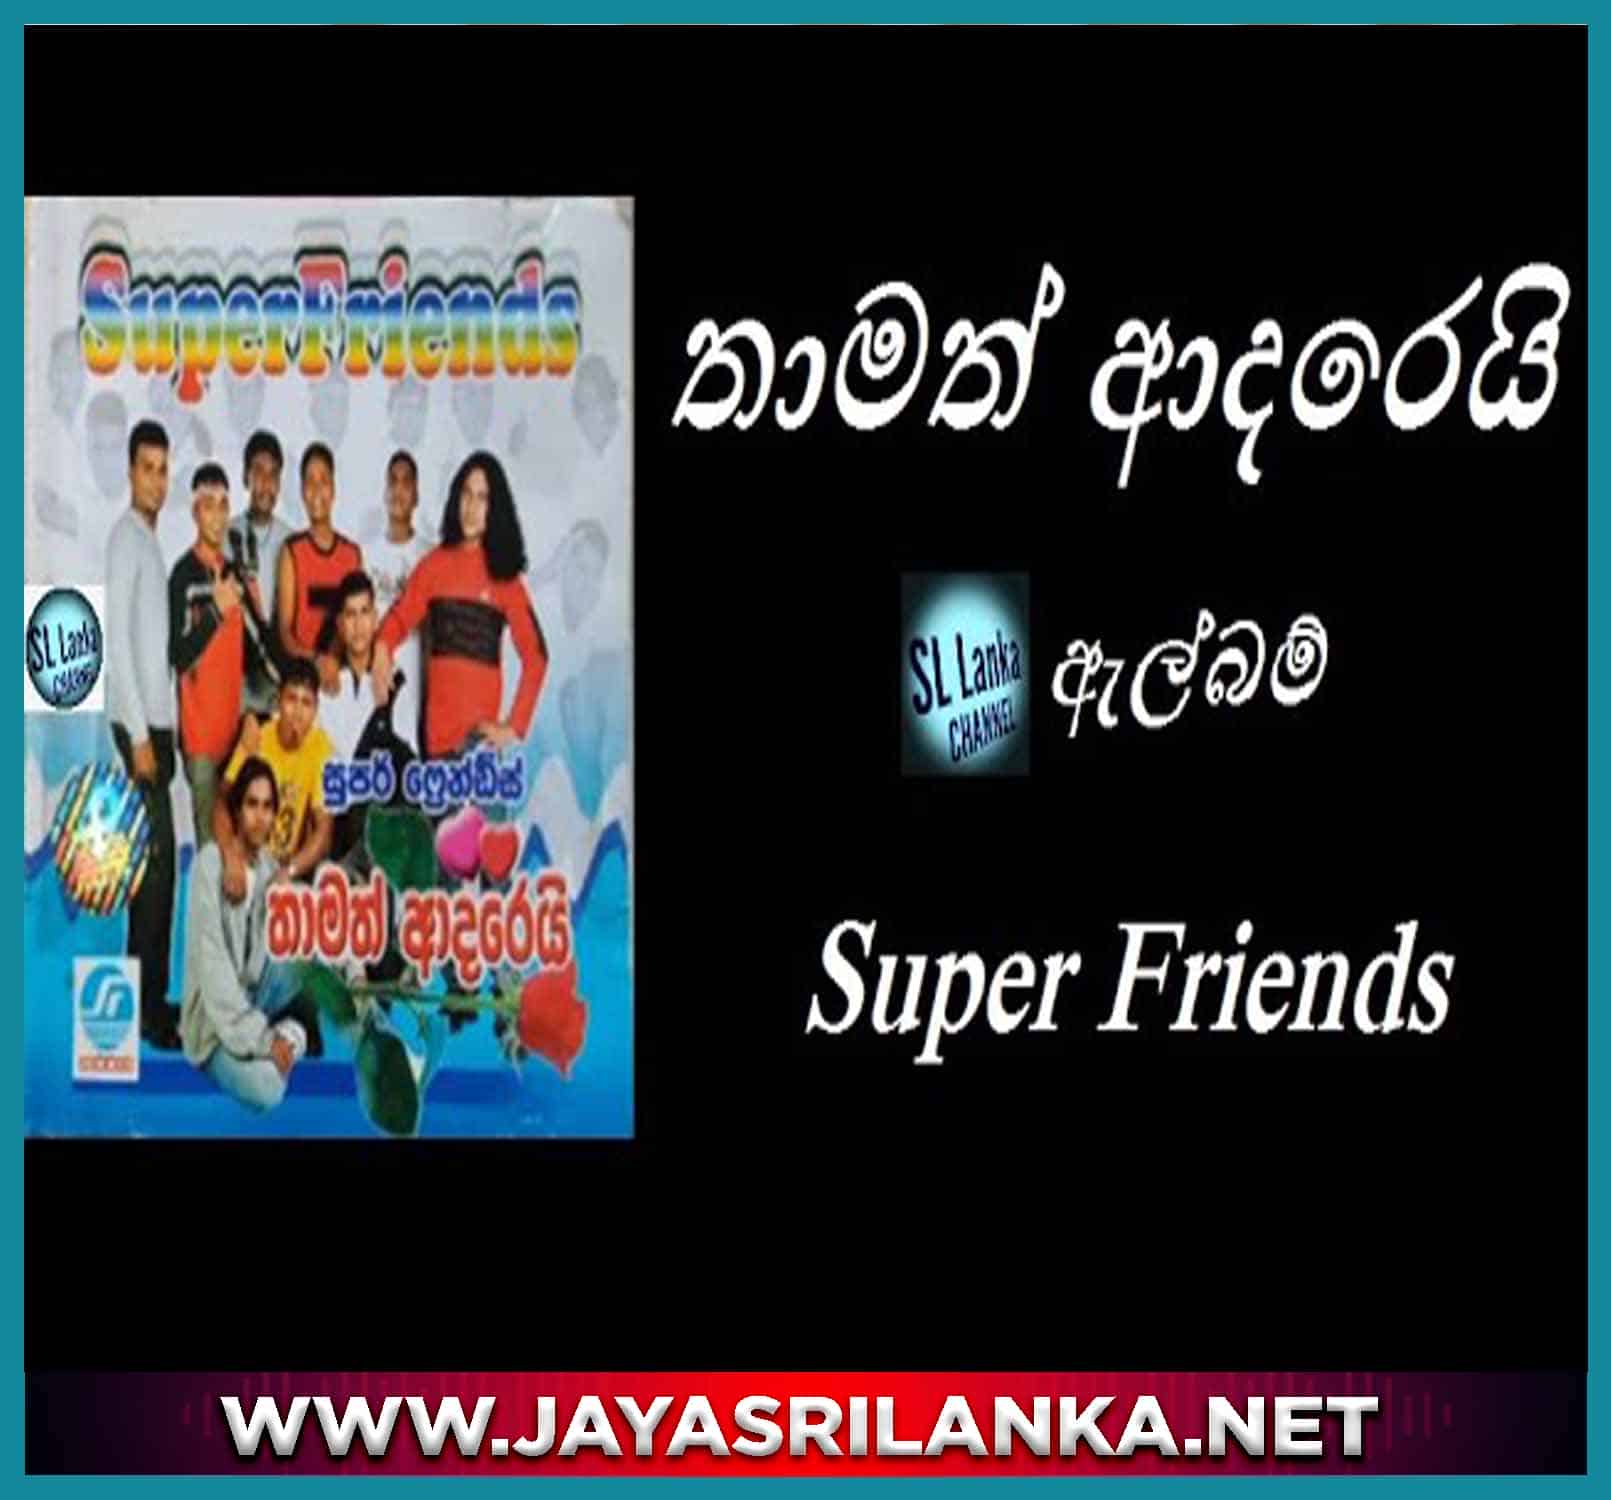 Sara Sanda Awith Ahasata - Super Friends mp3 Image